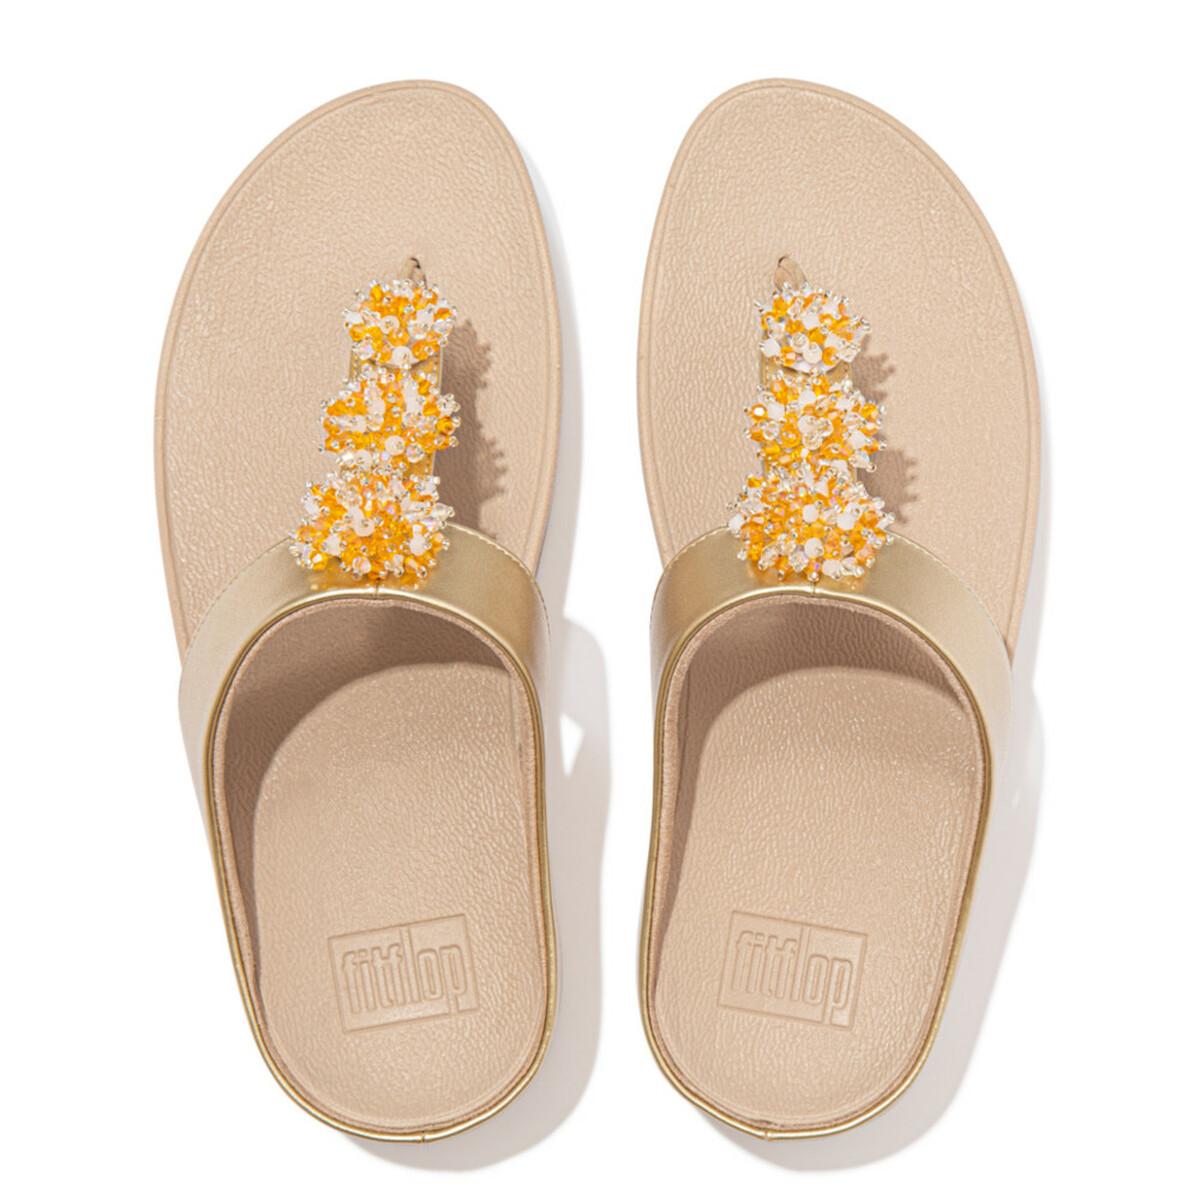 Buy Bead-Cluster Toe-Post Sandals Online | SKU: 228-238-51-3-Metro Shoes